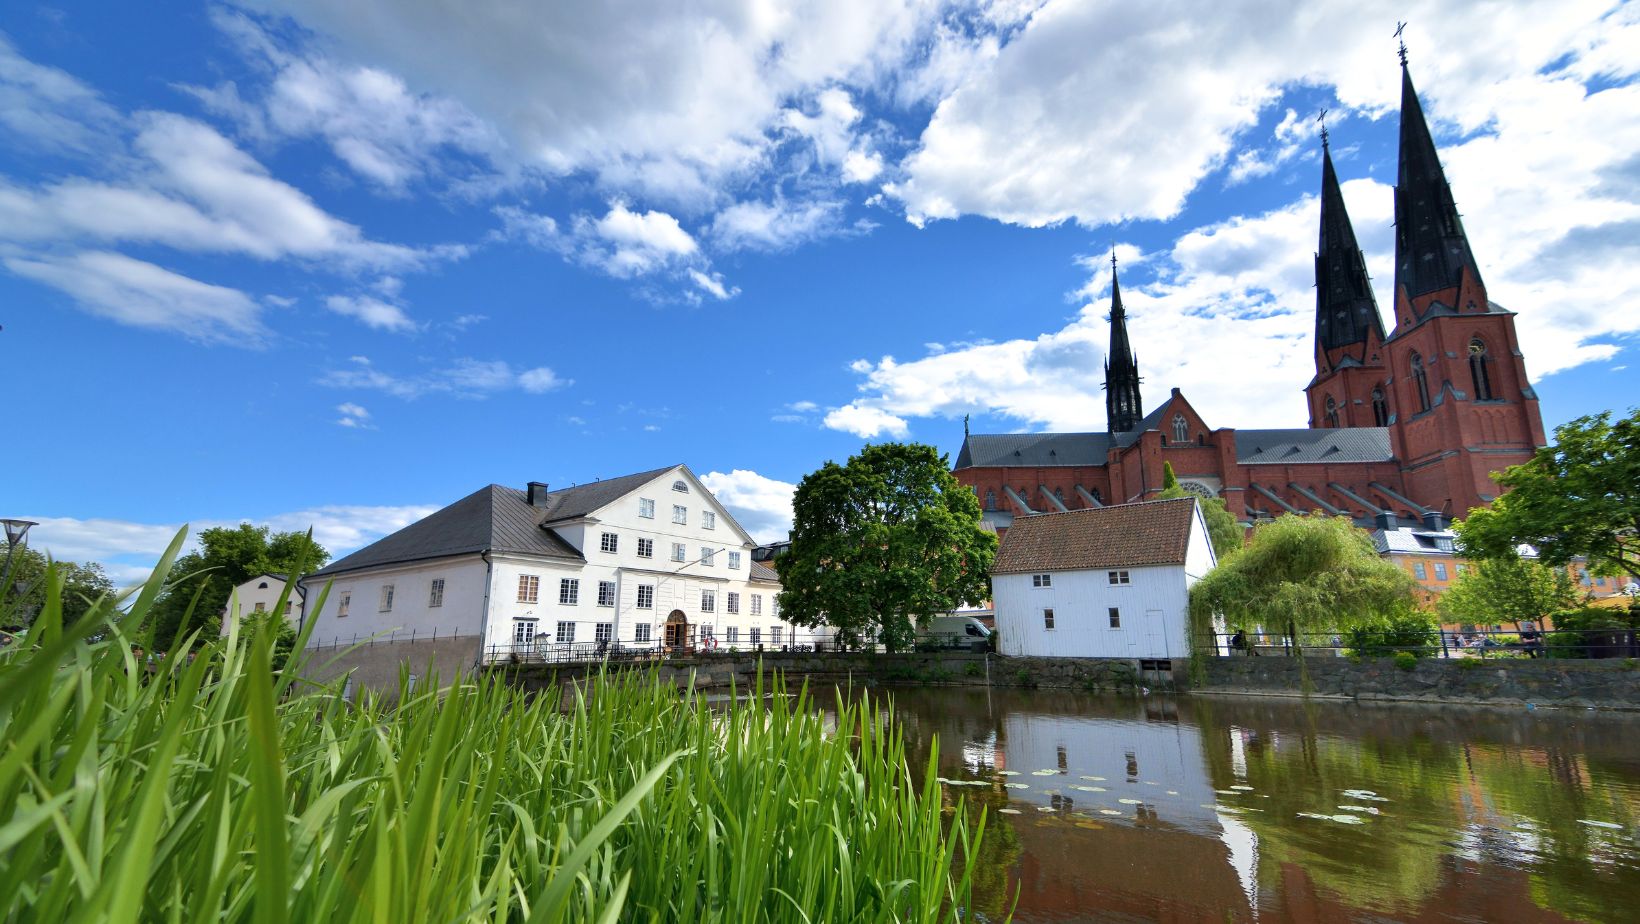 Historic centre of Uppsala, Sweden.